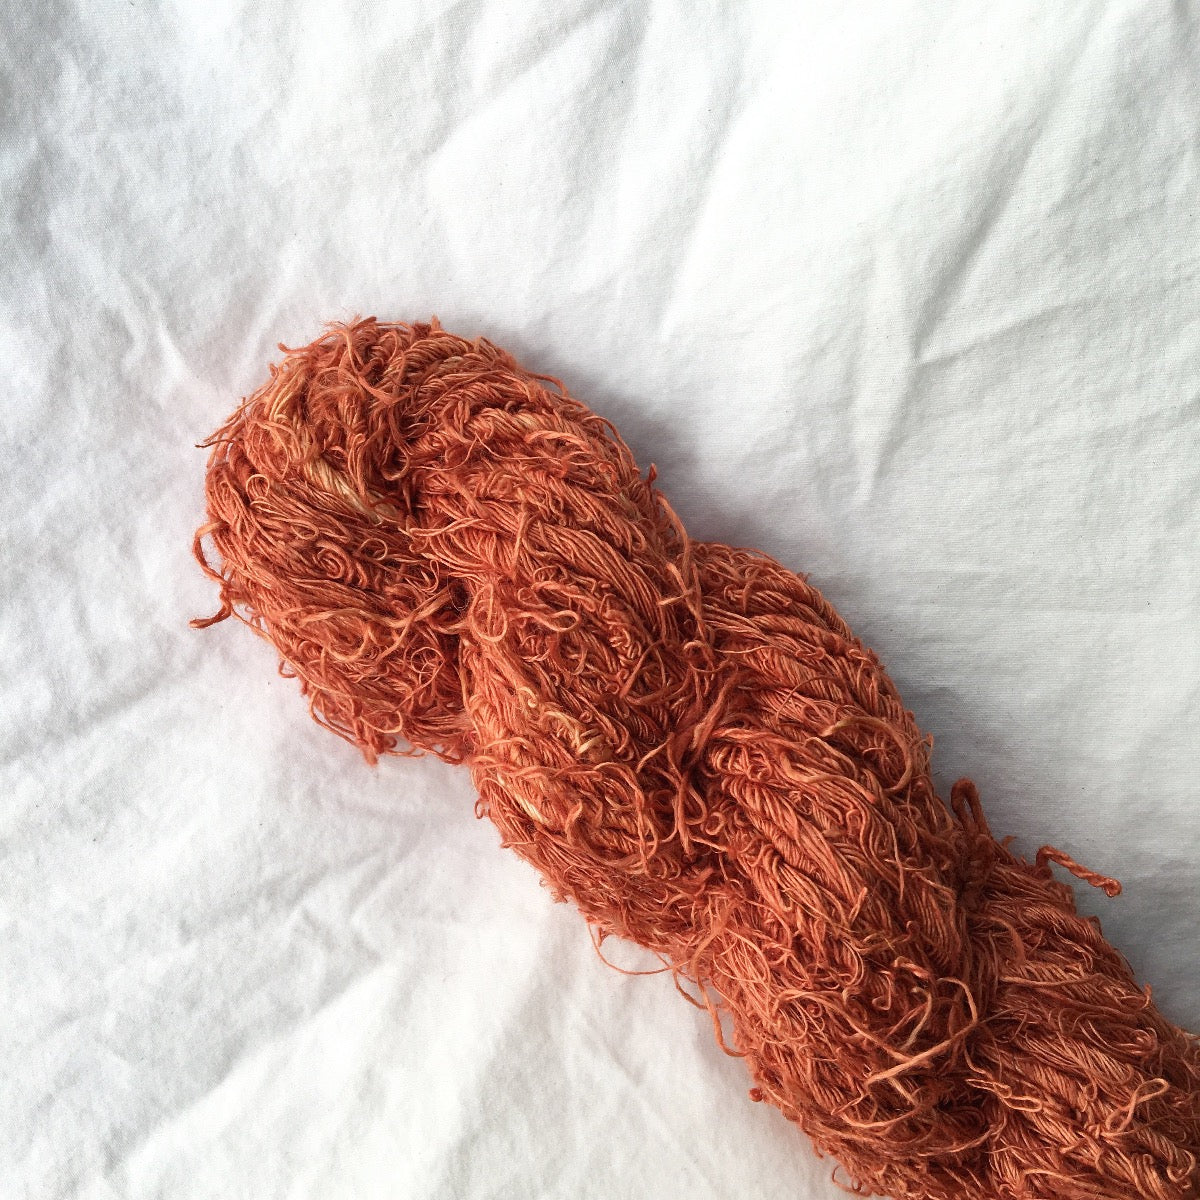 Hand spun dyed wool yarn for crocheting, knitting, weaving, fiber